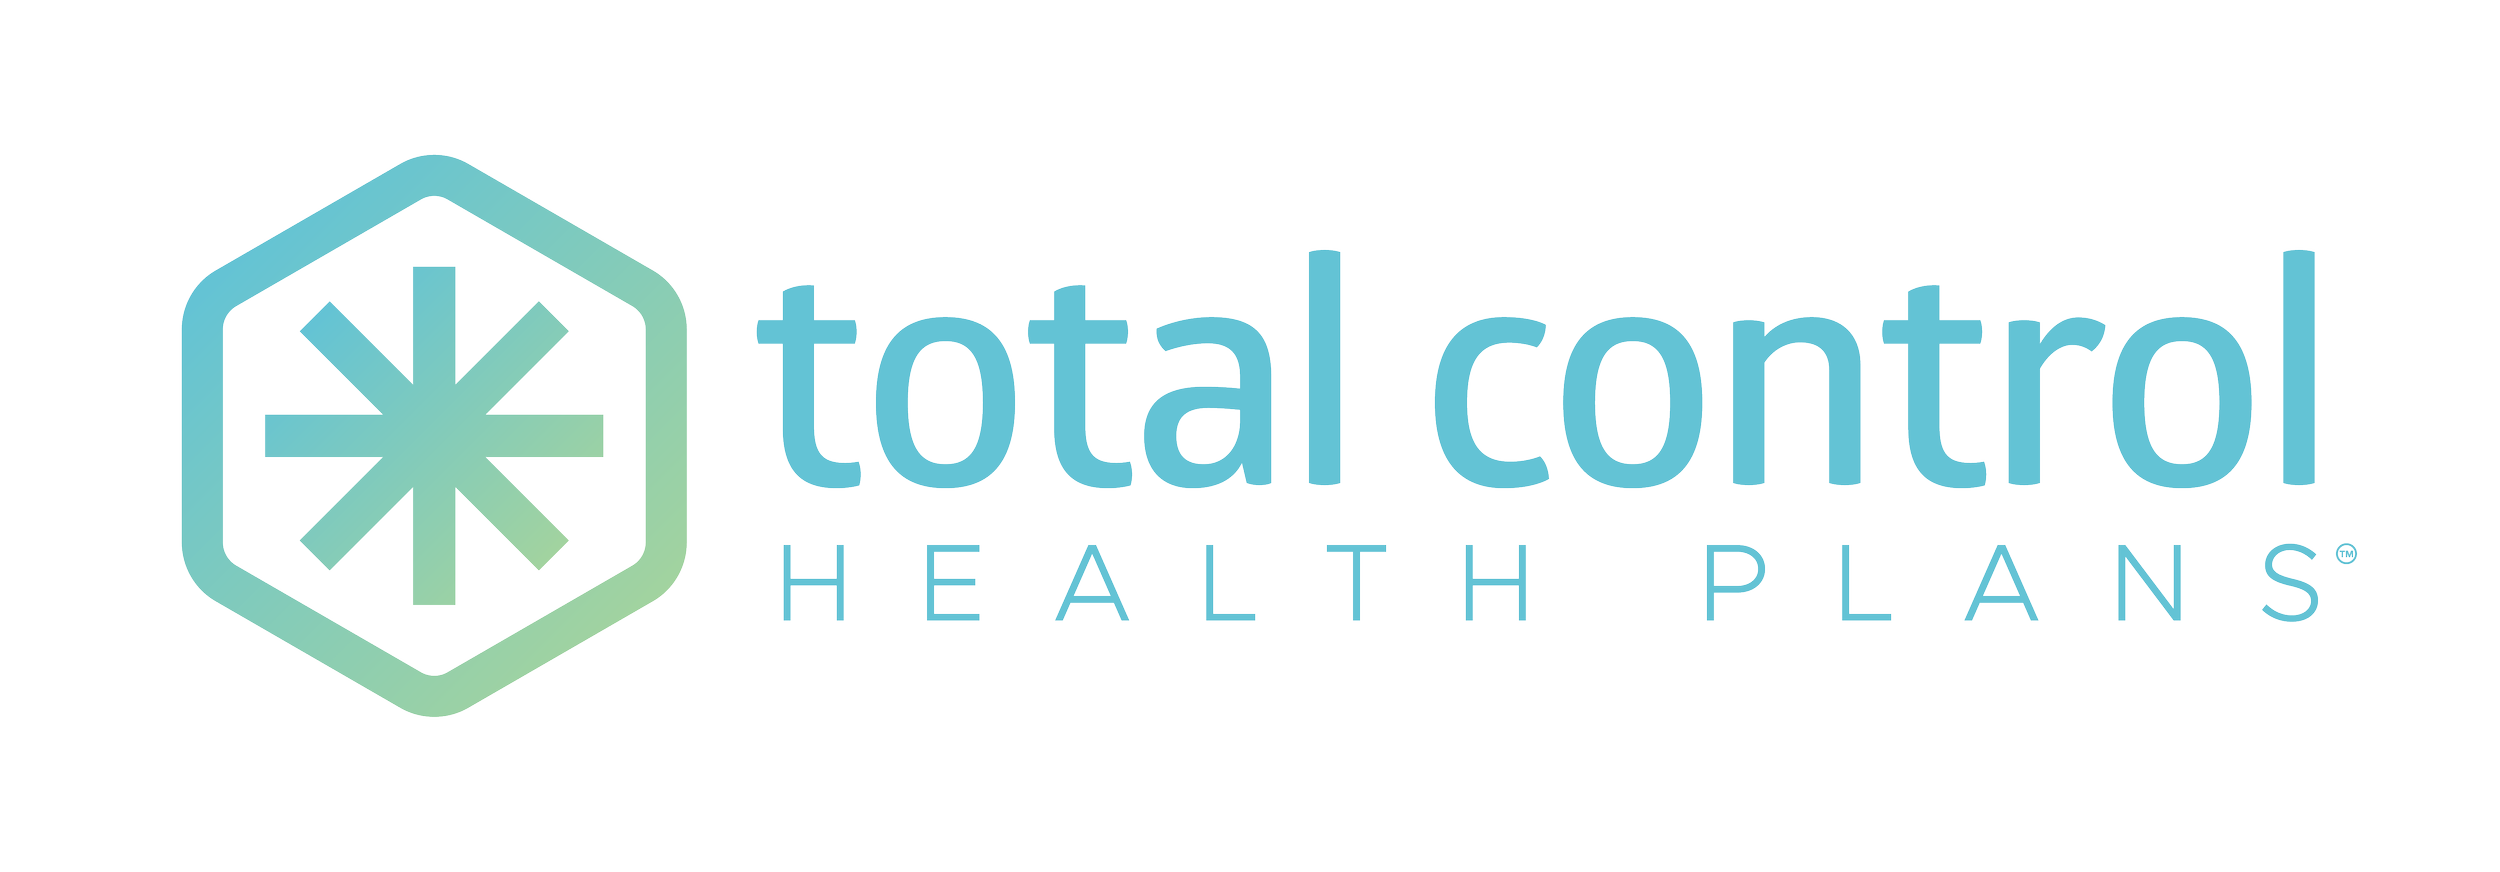 Total Control Heath Plans Logo.png